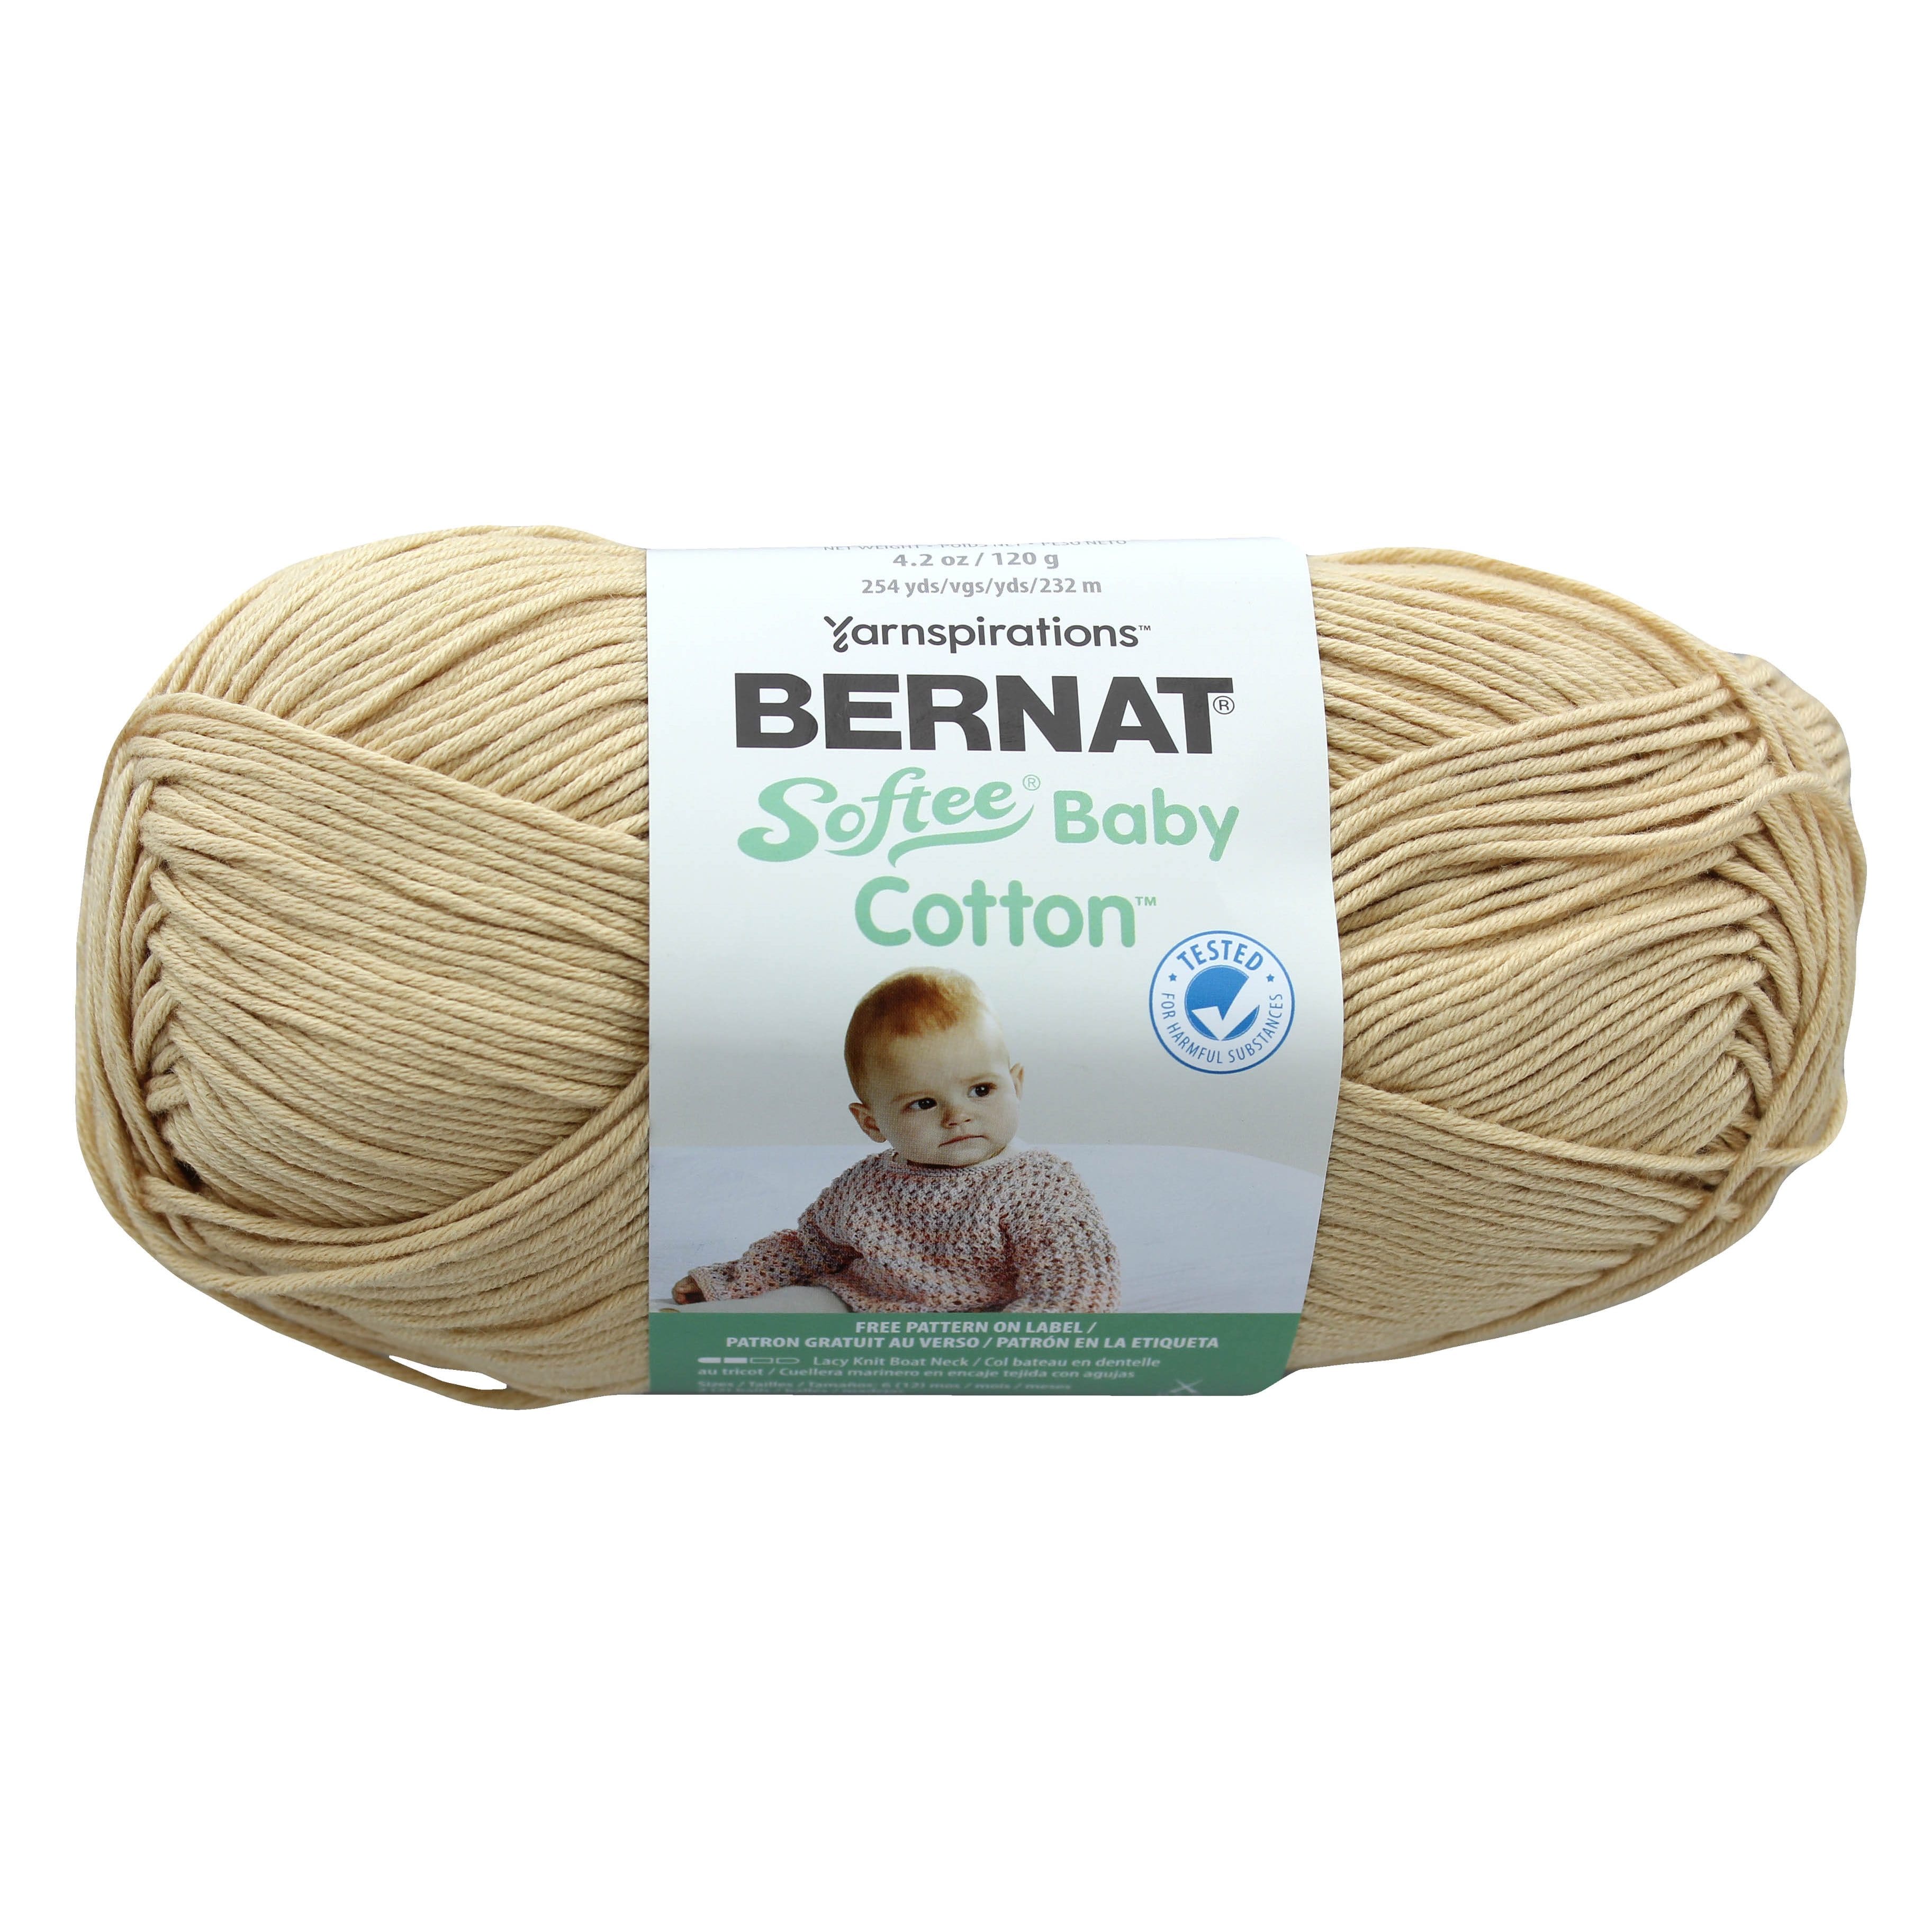 Bernat Softee Baby Cotton YARN